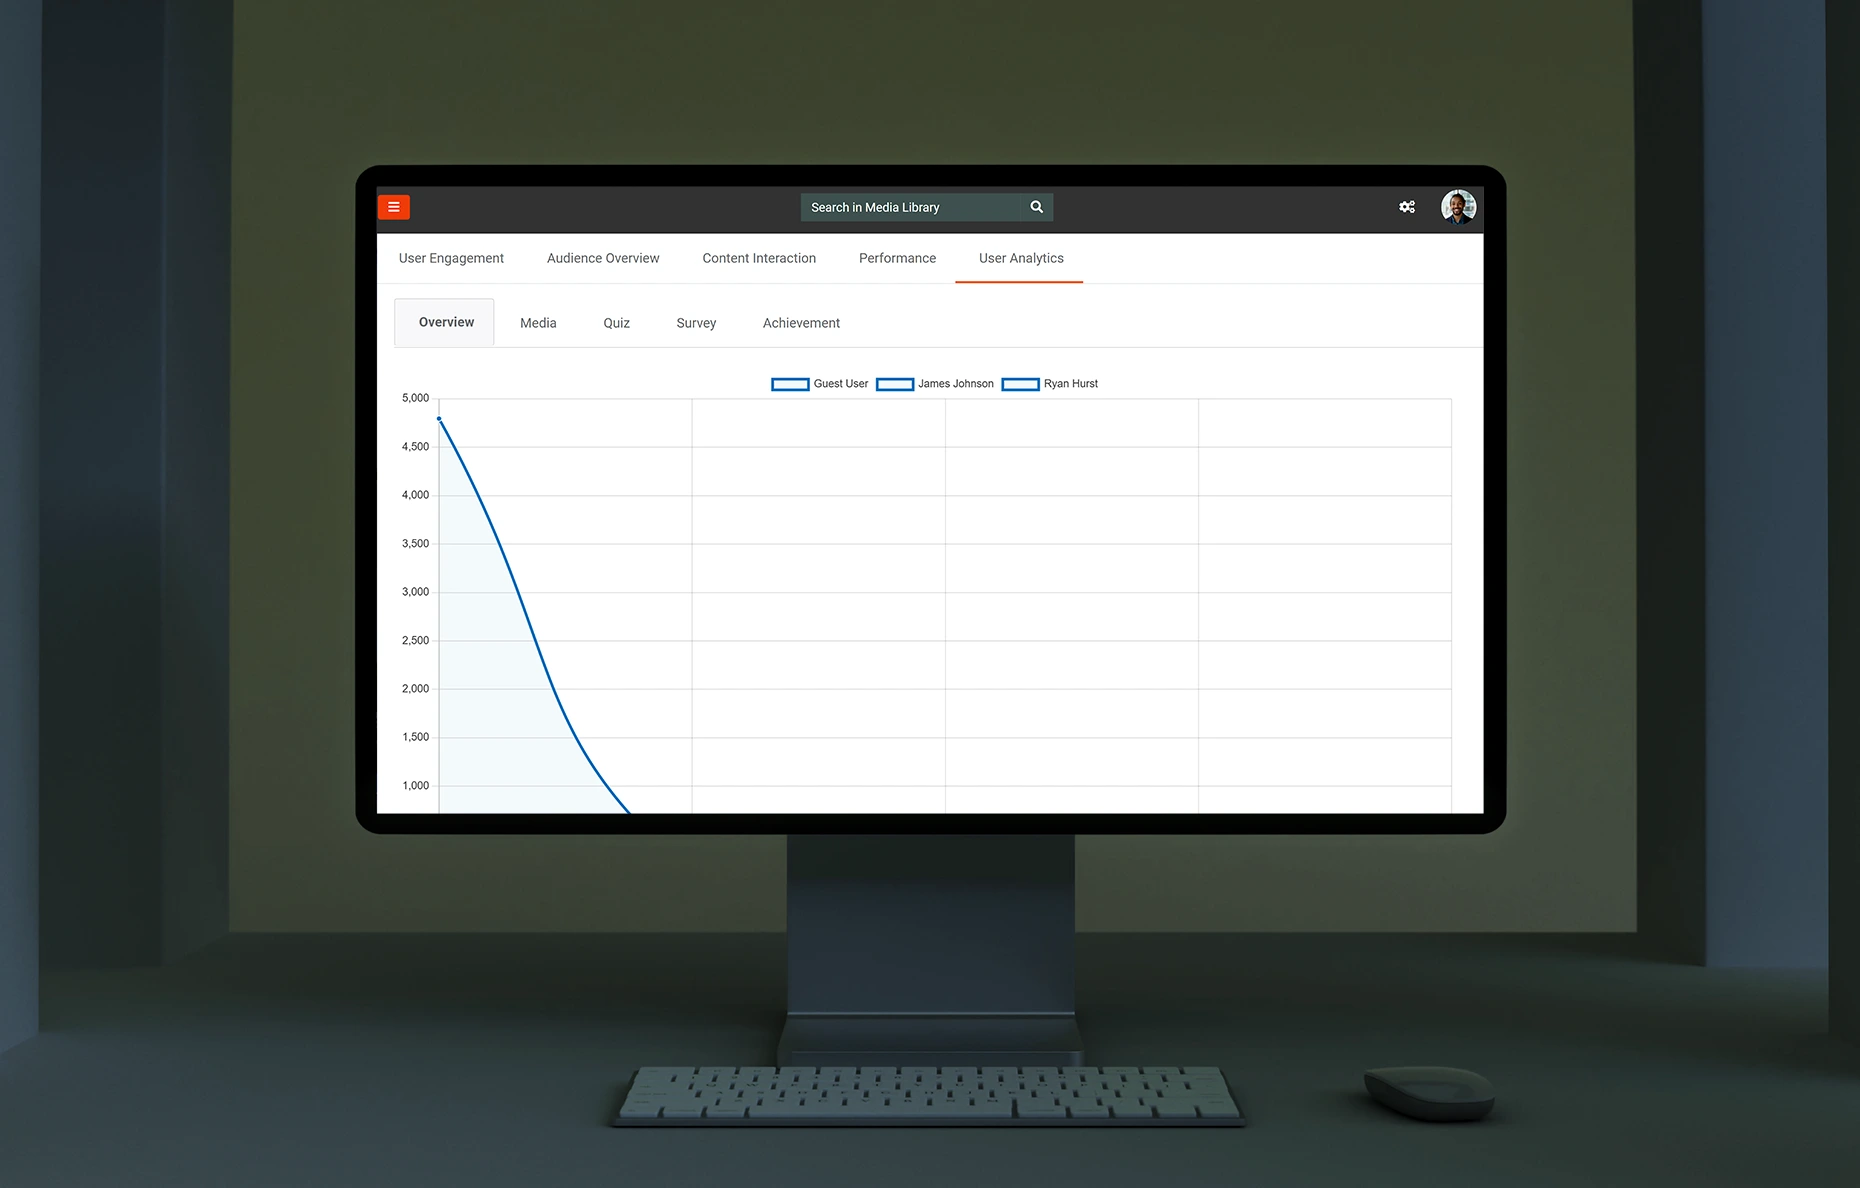 user analytics along with the engagement trend on EnterpriseTube